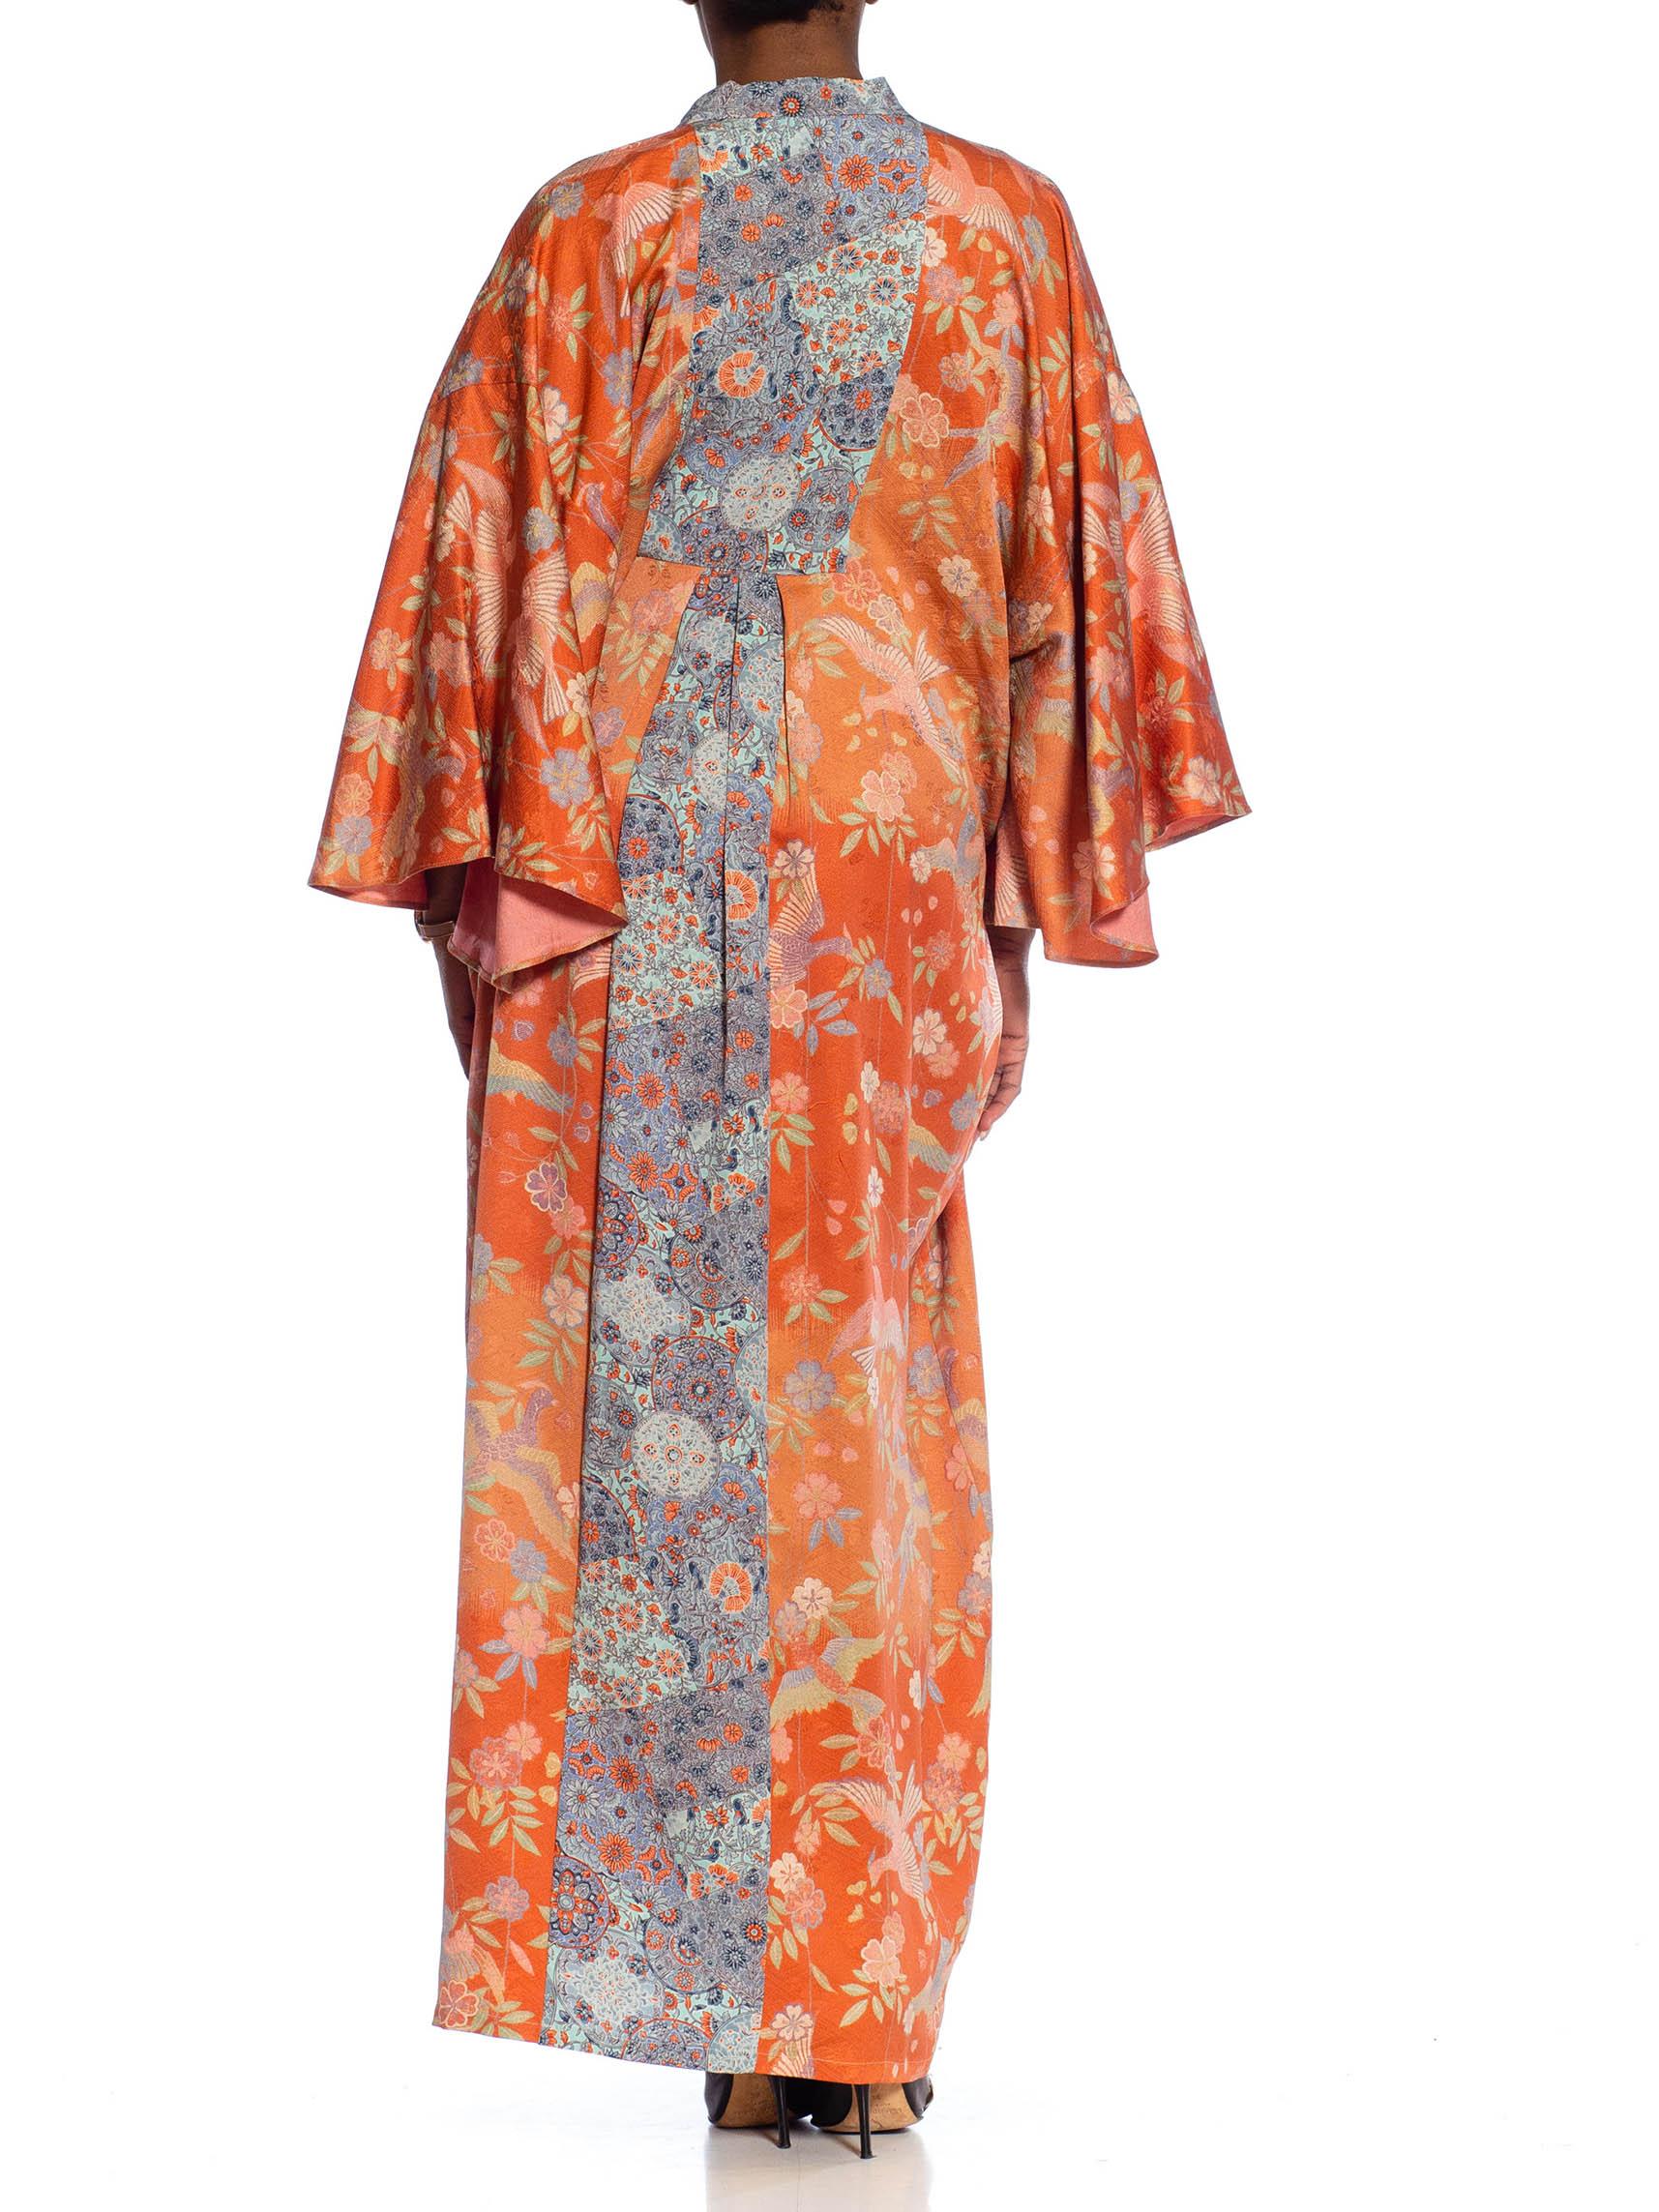 MORPHEW COLLECTION Orange Ombré Floral Japanese Kimono Silk Kaftan 3